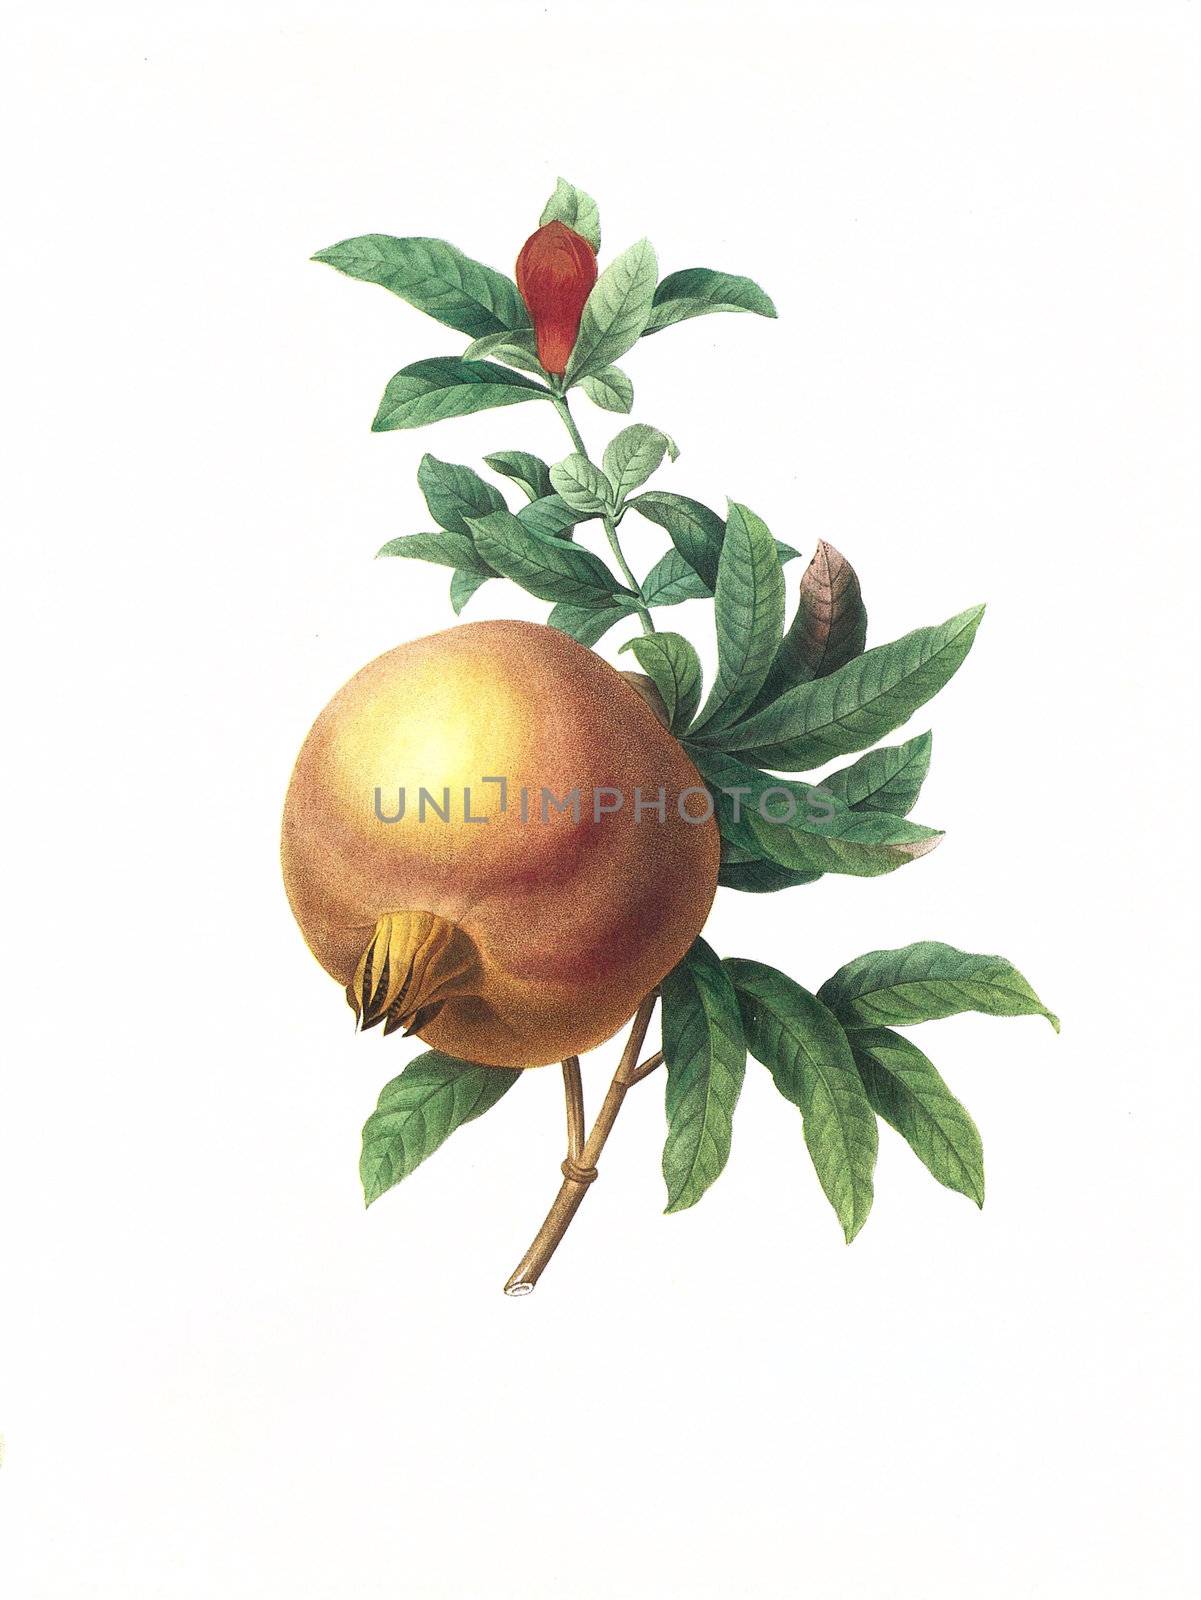 flower antique illustration grenade by matteobragaglio